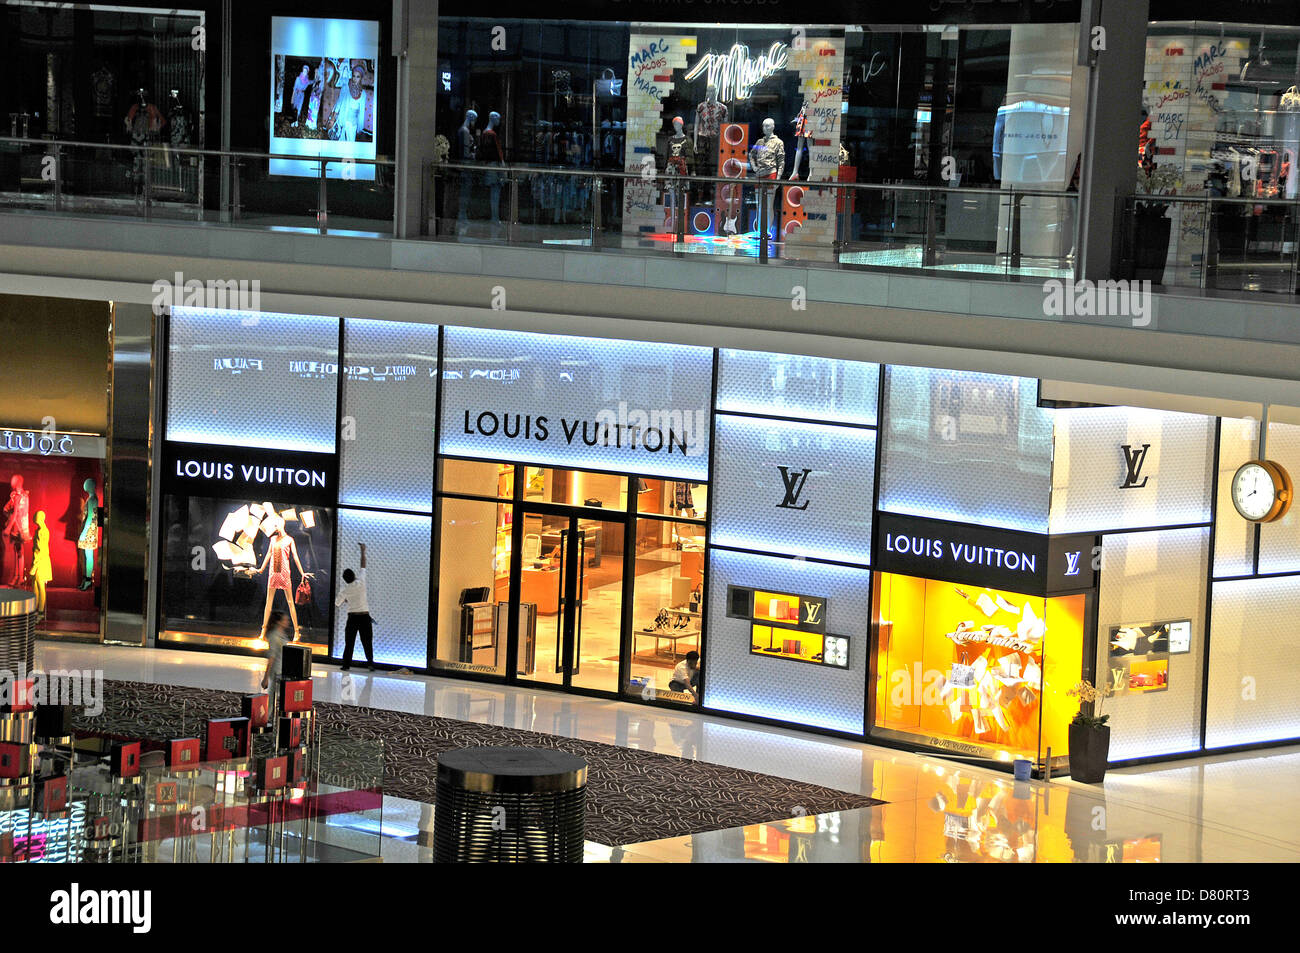 Louis Vuitton boutique The Dubai mall Dubai UAE Stock Photo: 56567059 - Alamy